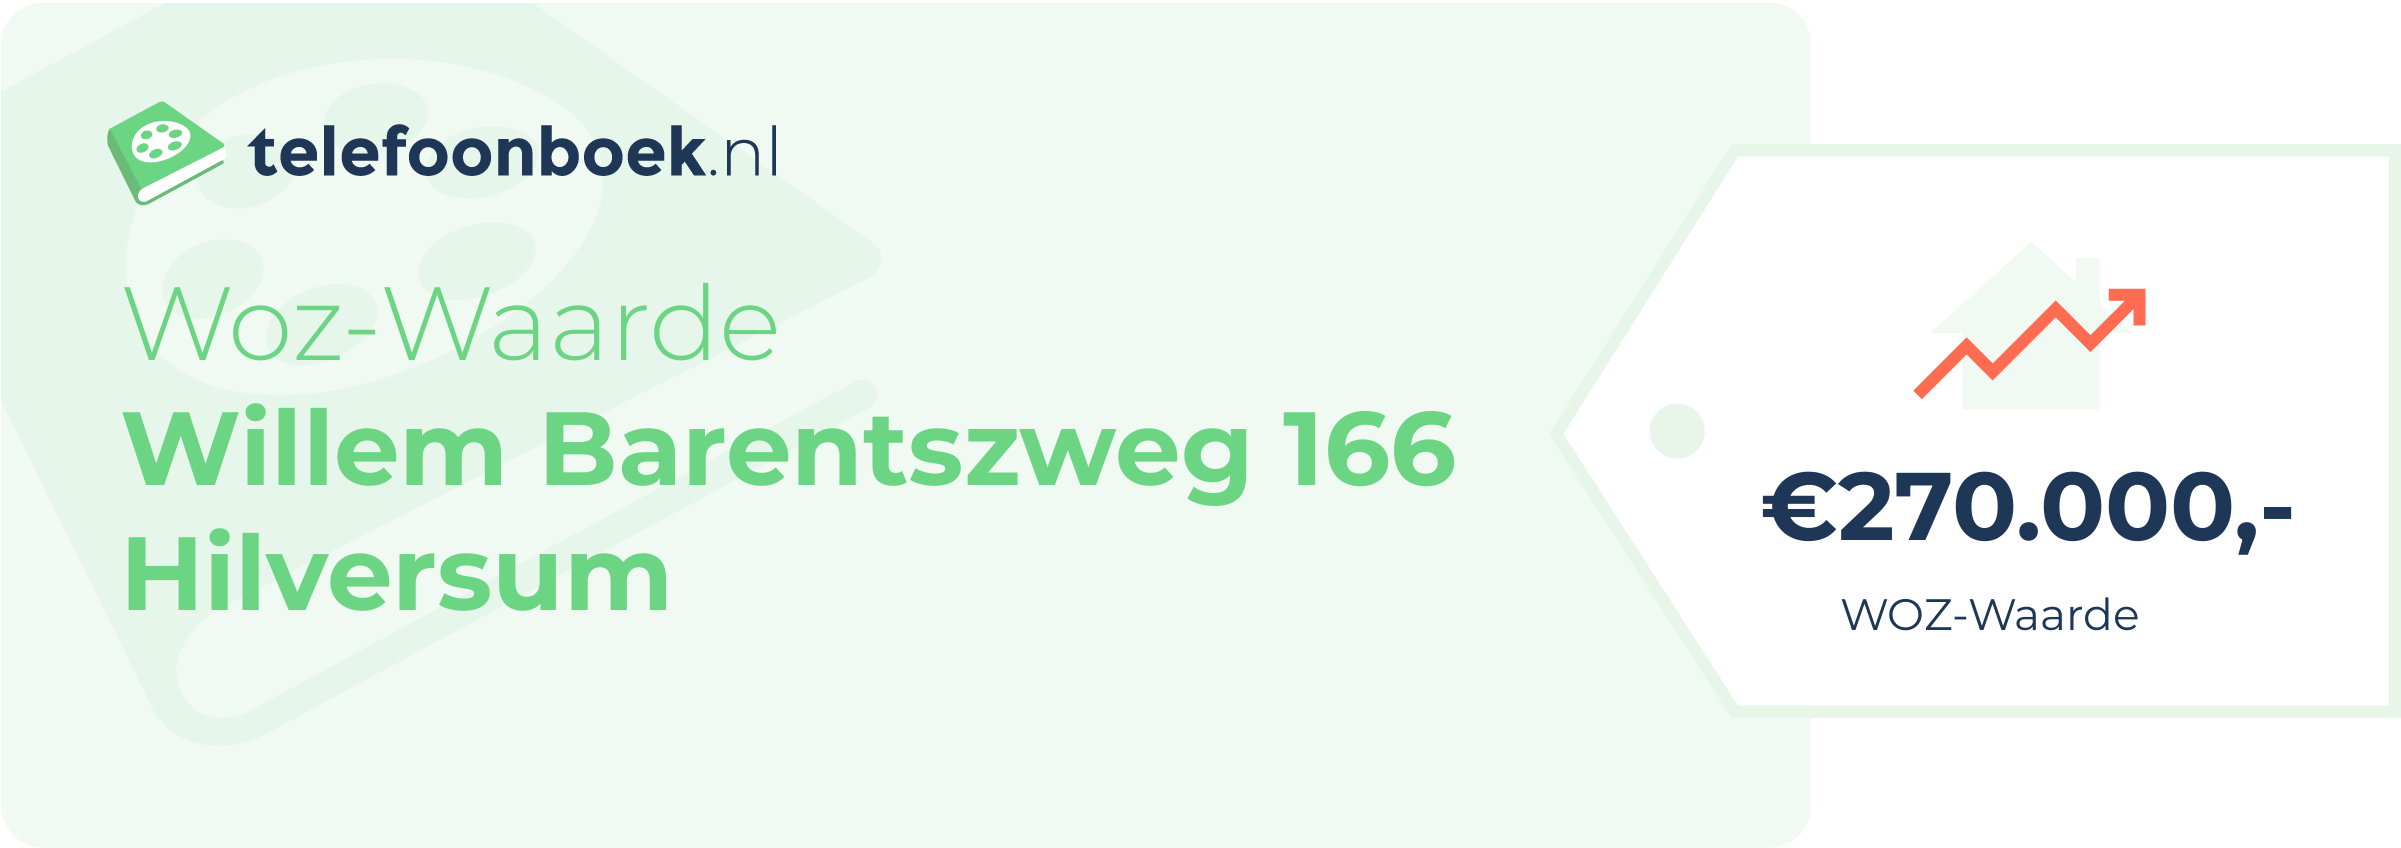 WOZ-waarde Willem Barentszweg 166 Hilversum